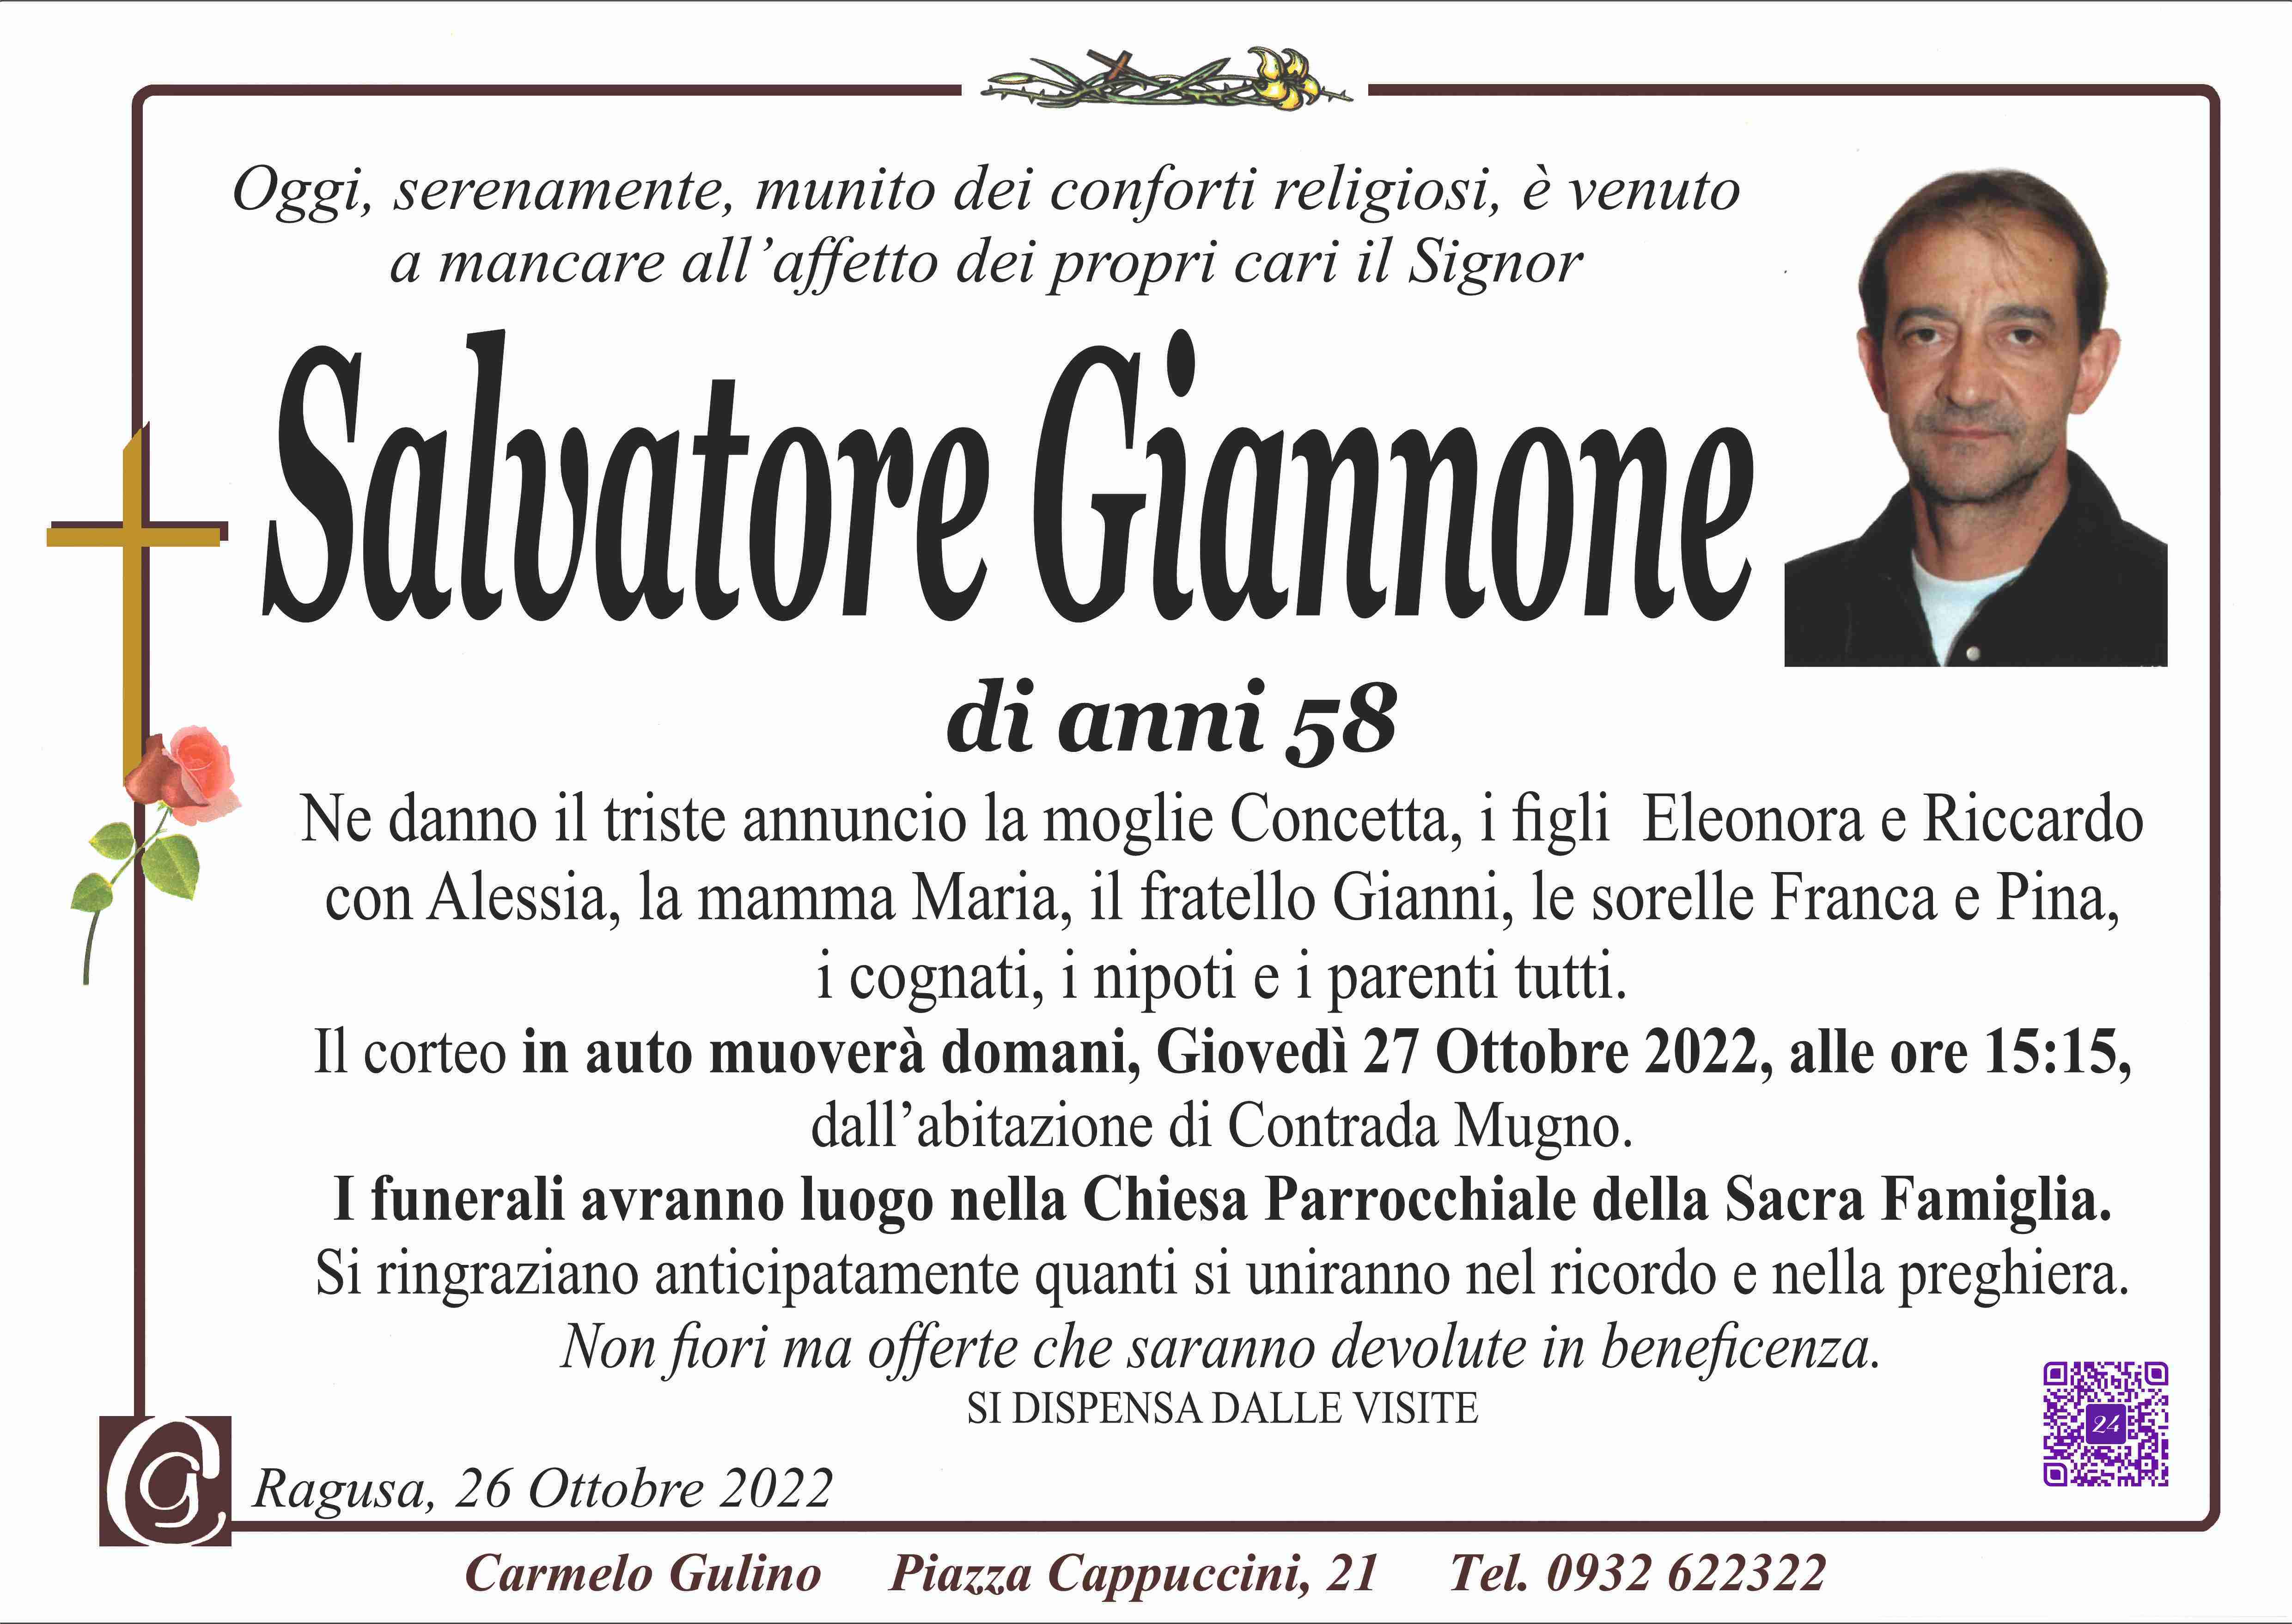 Salvatore Giannone